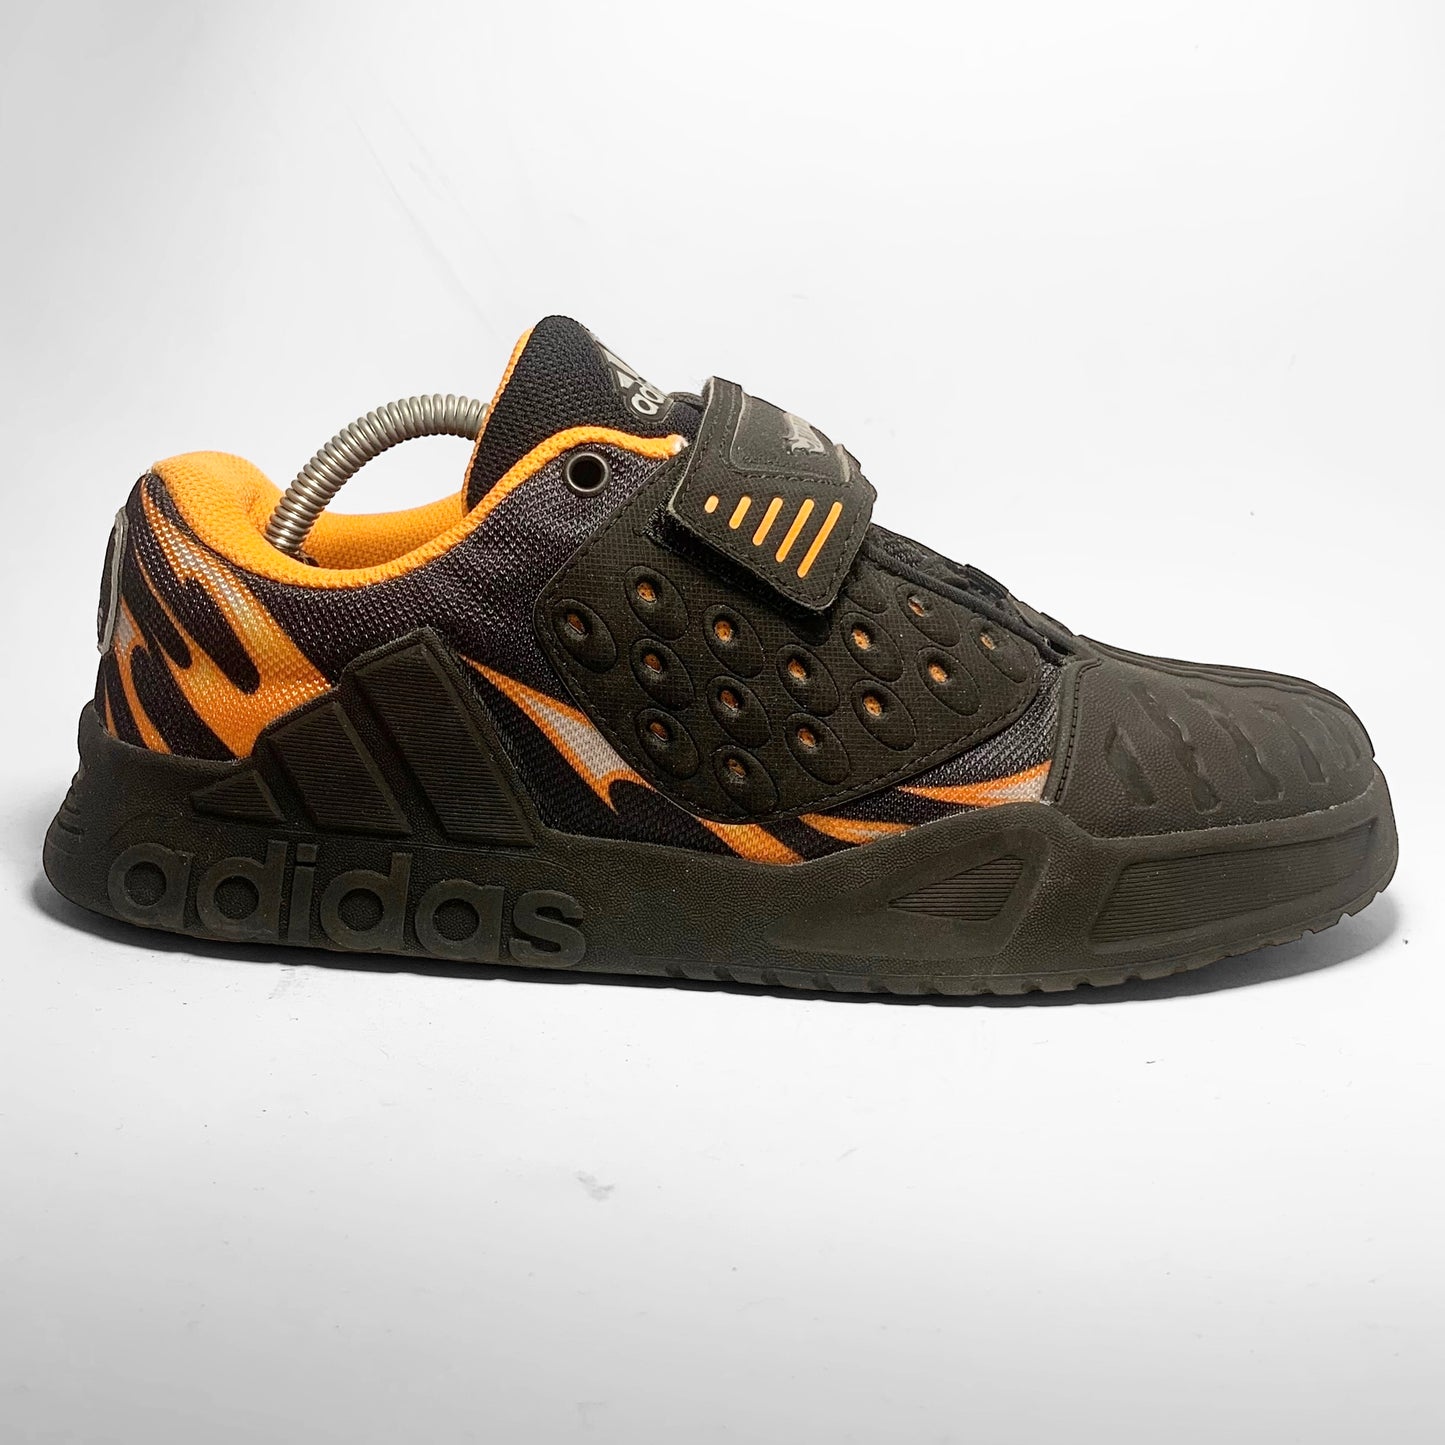 Adidas x Hot Wheels (2000s)